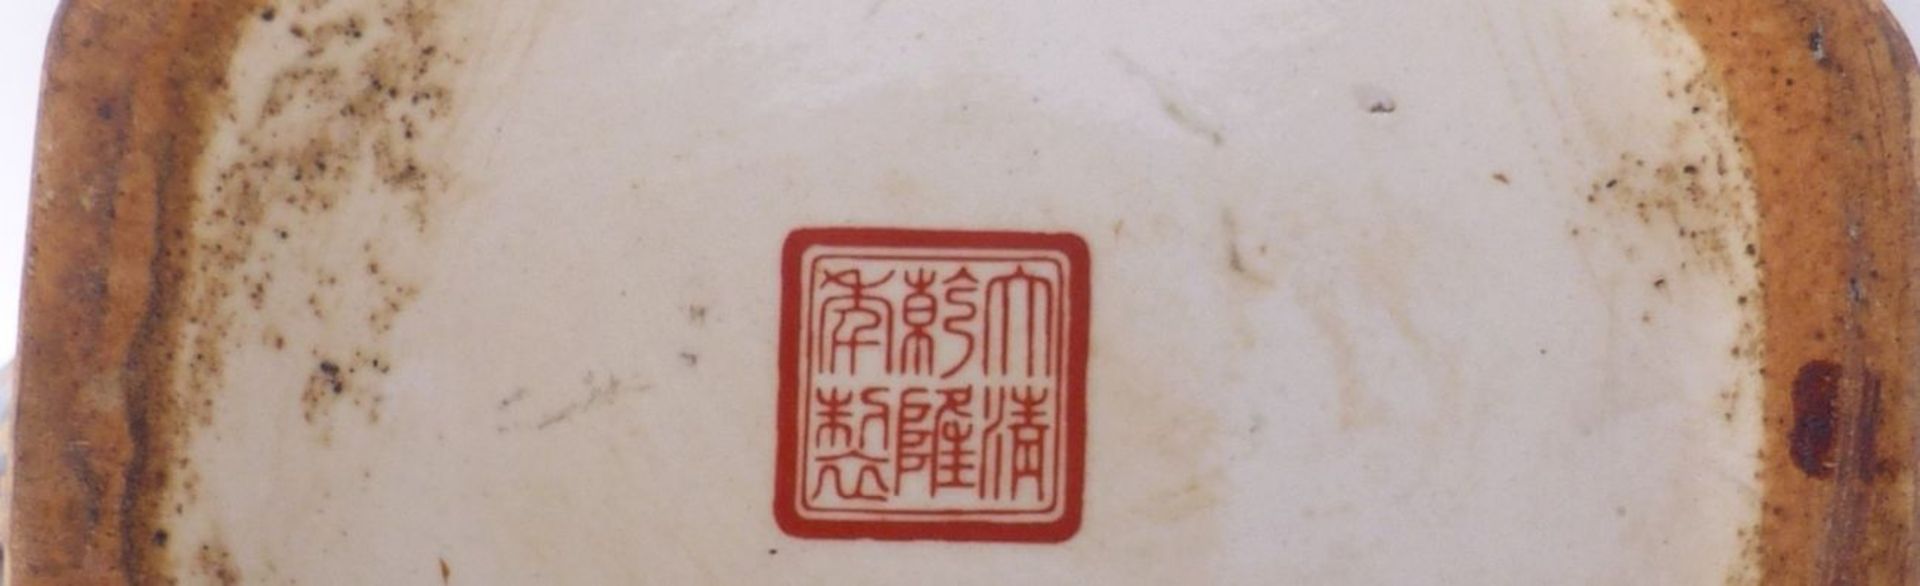 Große DeckelkanneChina, 20. Jh.Konische Form mit achtfach facettierter Wandung, geschwungene Tülle - Bild 4 aus 5